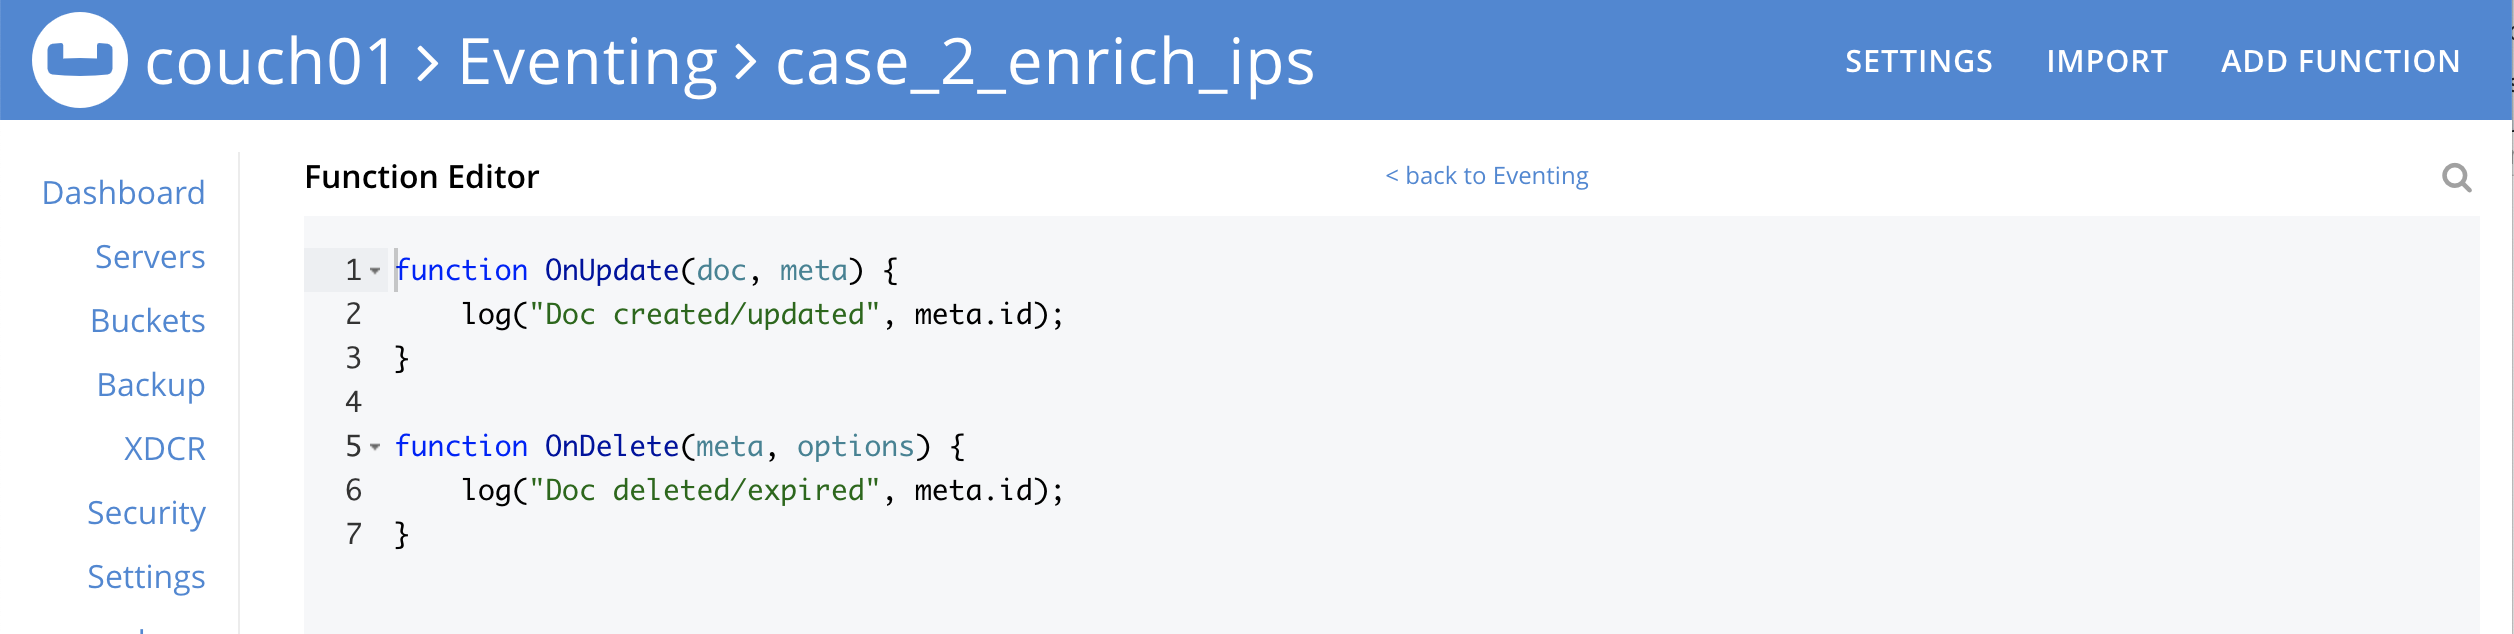 enrichcase2 02 editor with default